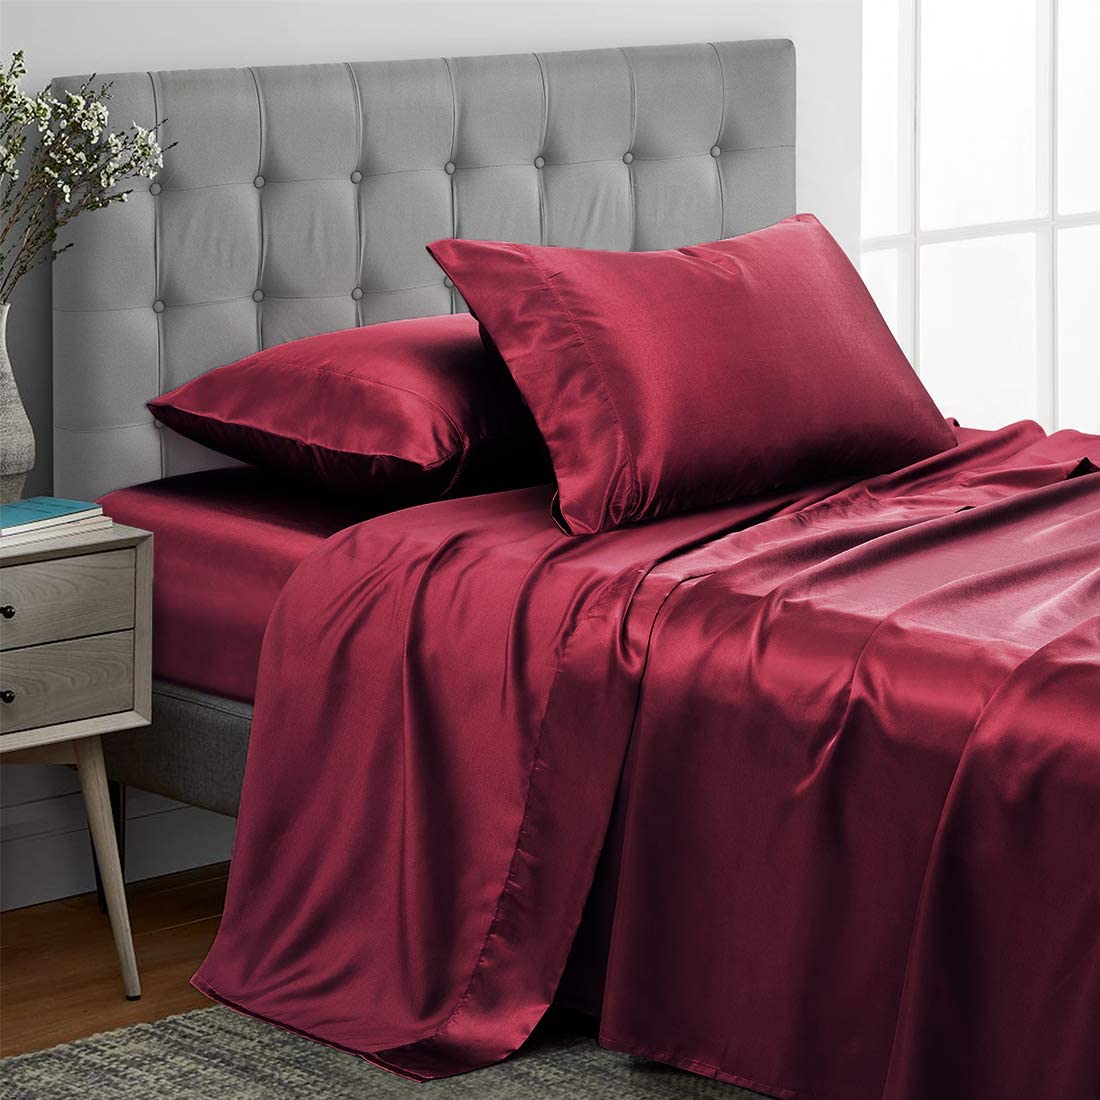 Vonty Satin Sheets Queen Size Silky Soft Satin Bed Sheets Teal Satin Sheet Set Ebay 4765